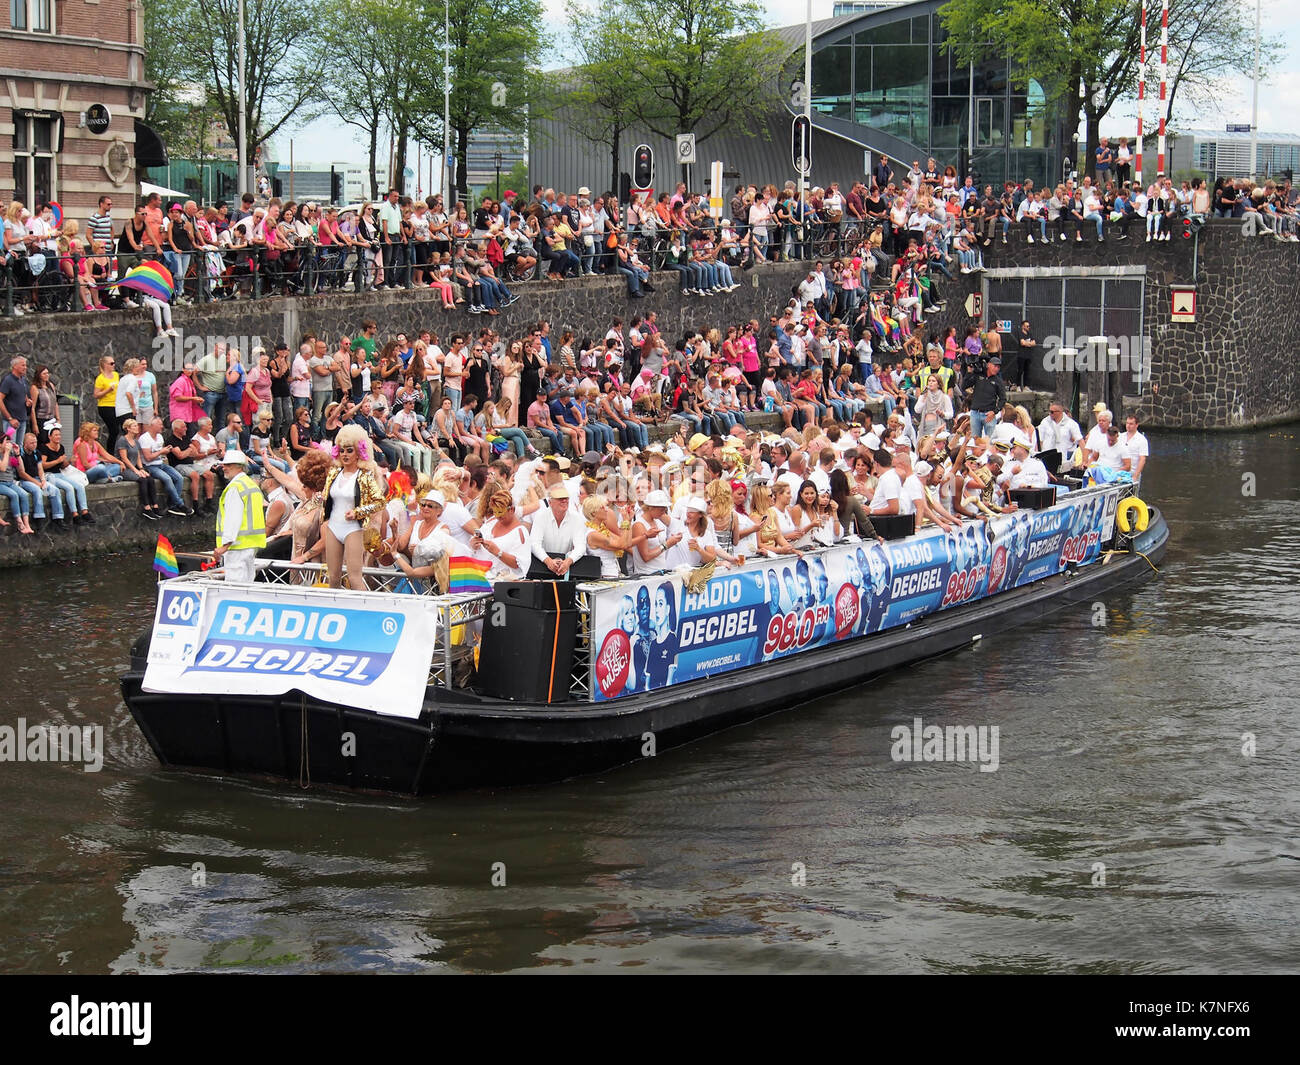 Boat 60 Radio Decibel, Canal Parade Amsterdam 2017 foto 1 Stock Photo